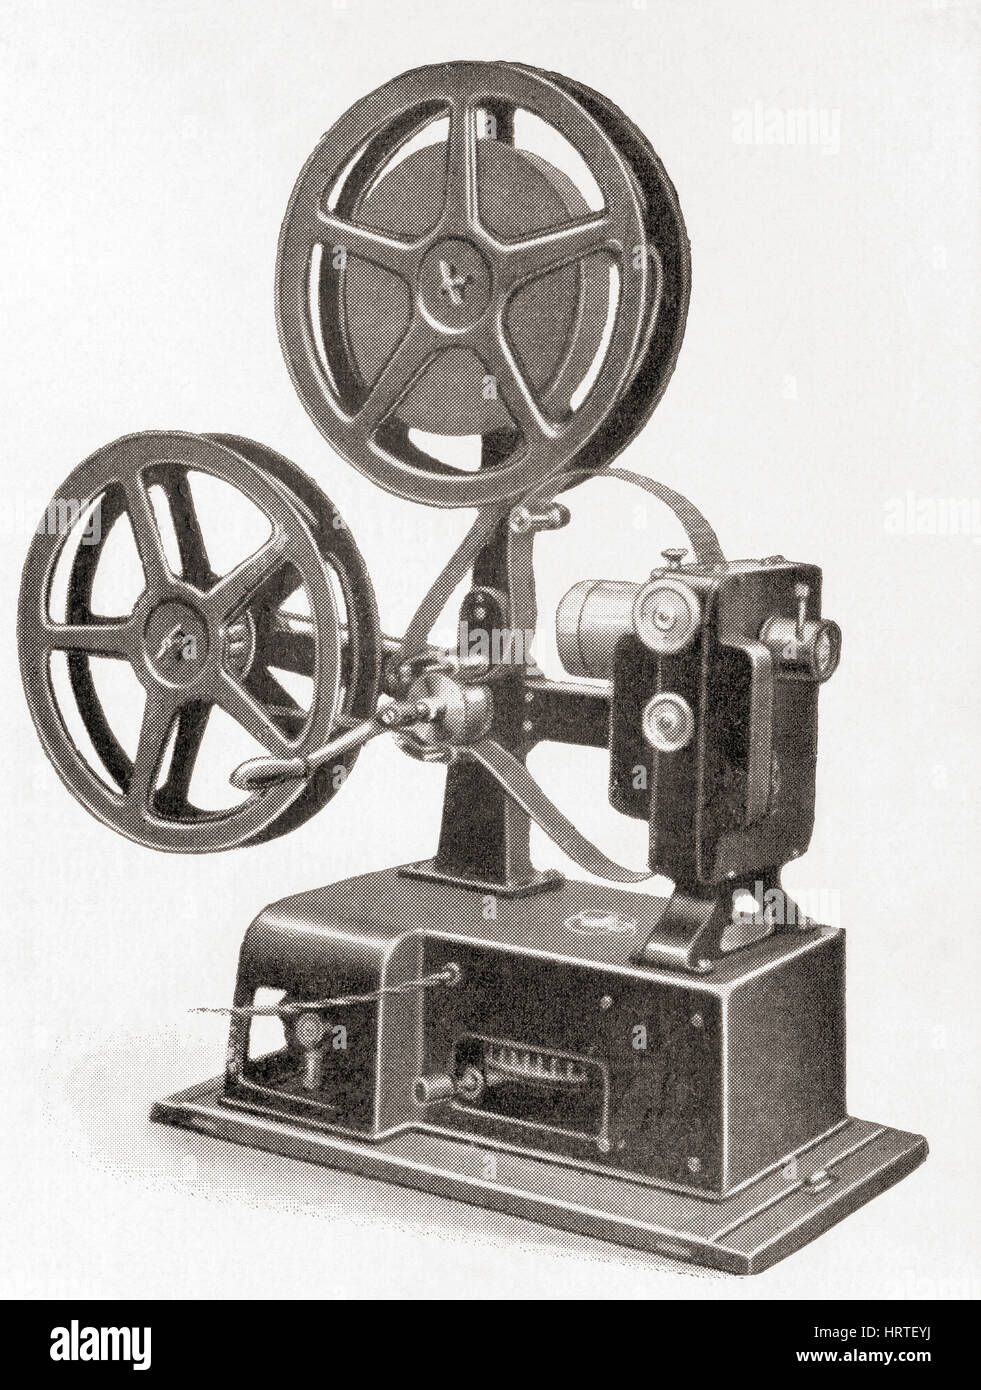 File:Filmprojektor mit Handkurbel,Heimprojektor für 35mm  Stummfilm.Malteserkreuzgetriebe.JPG - Wikipedia